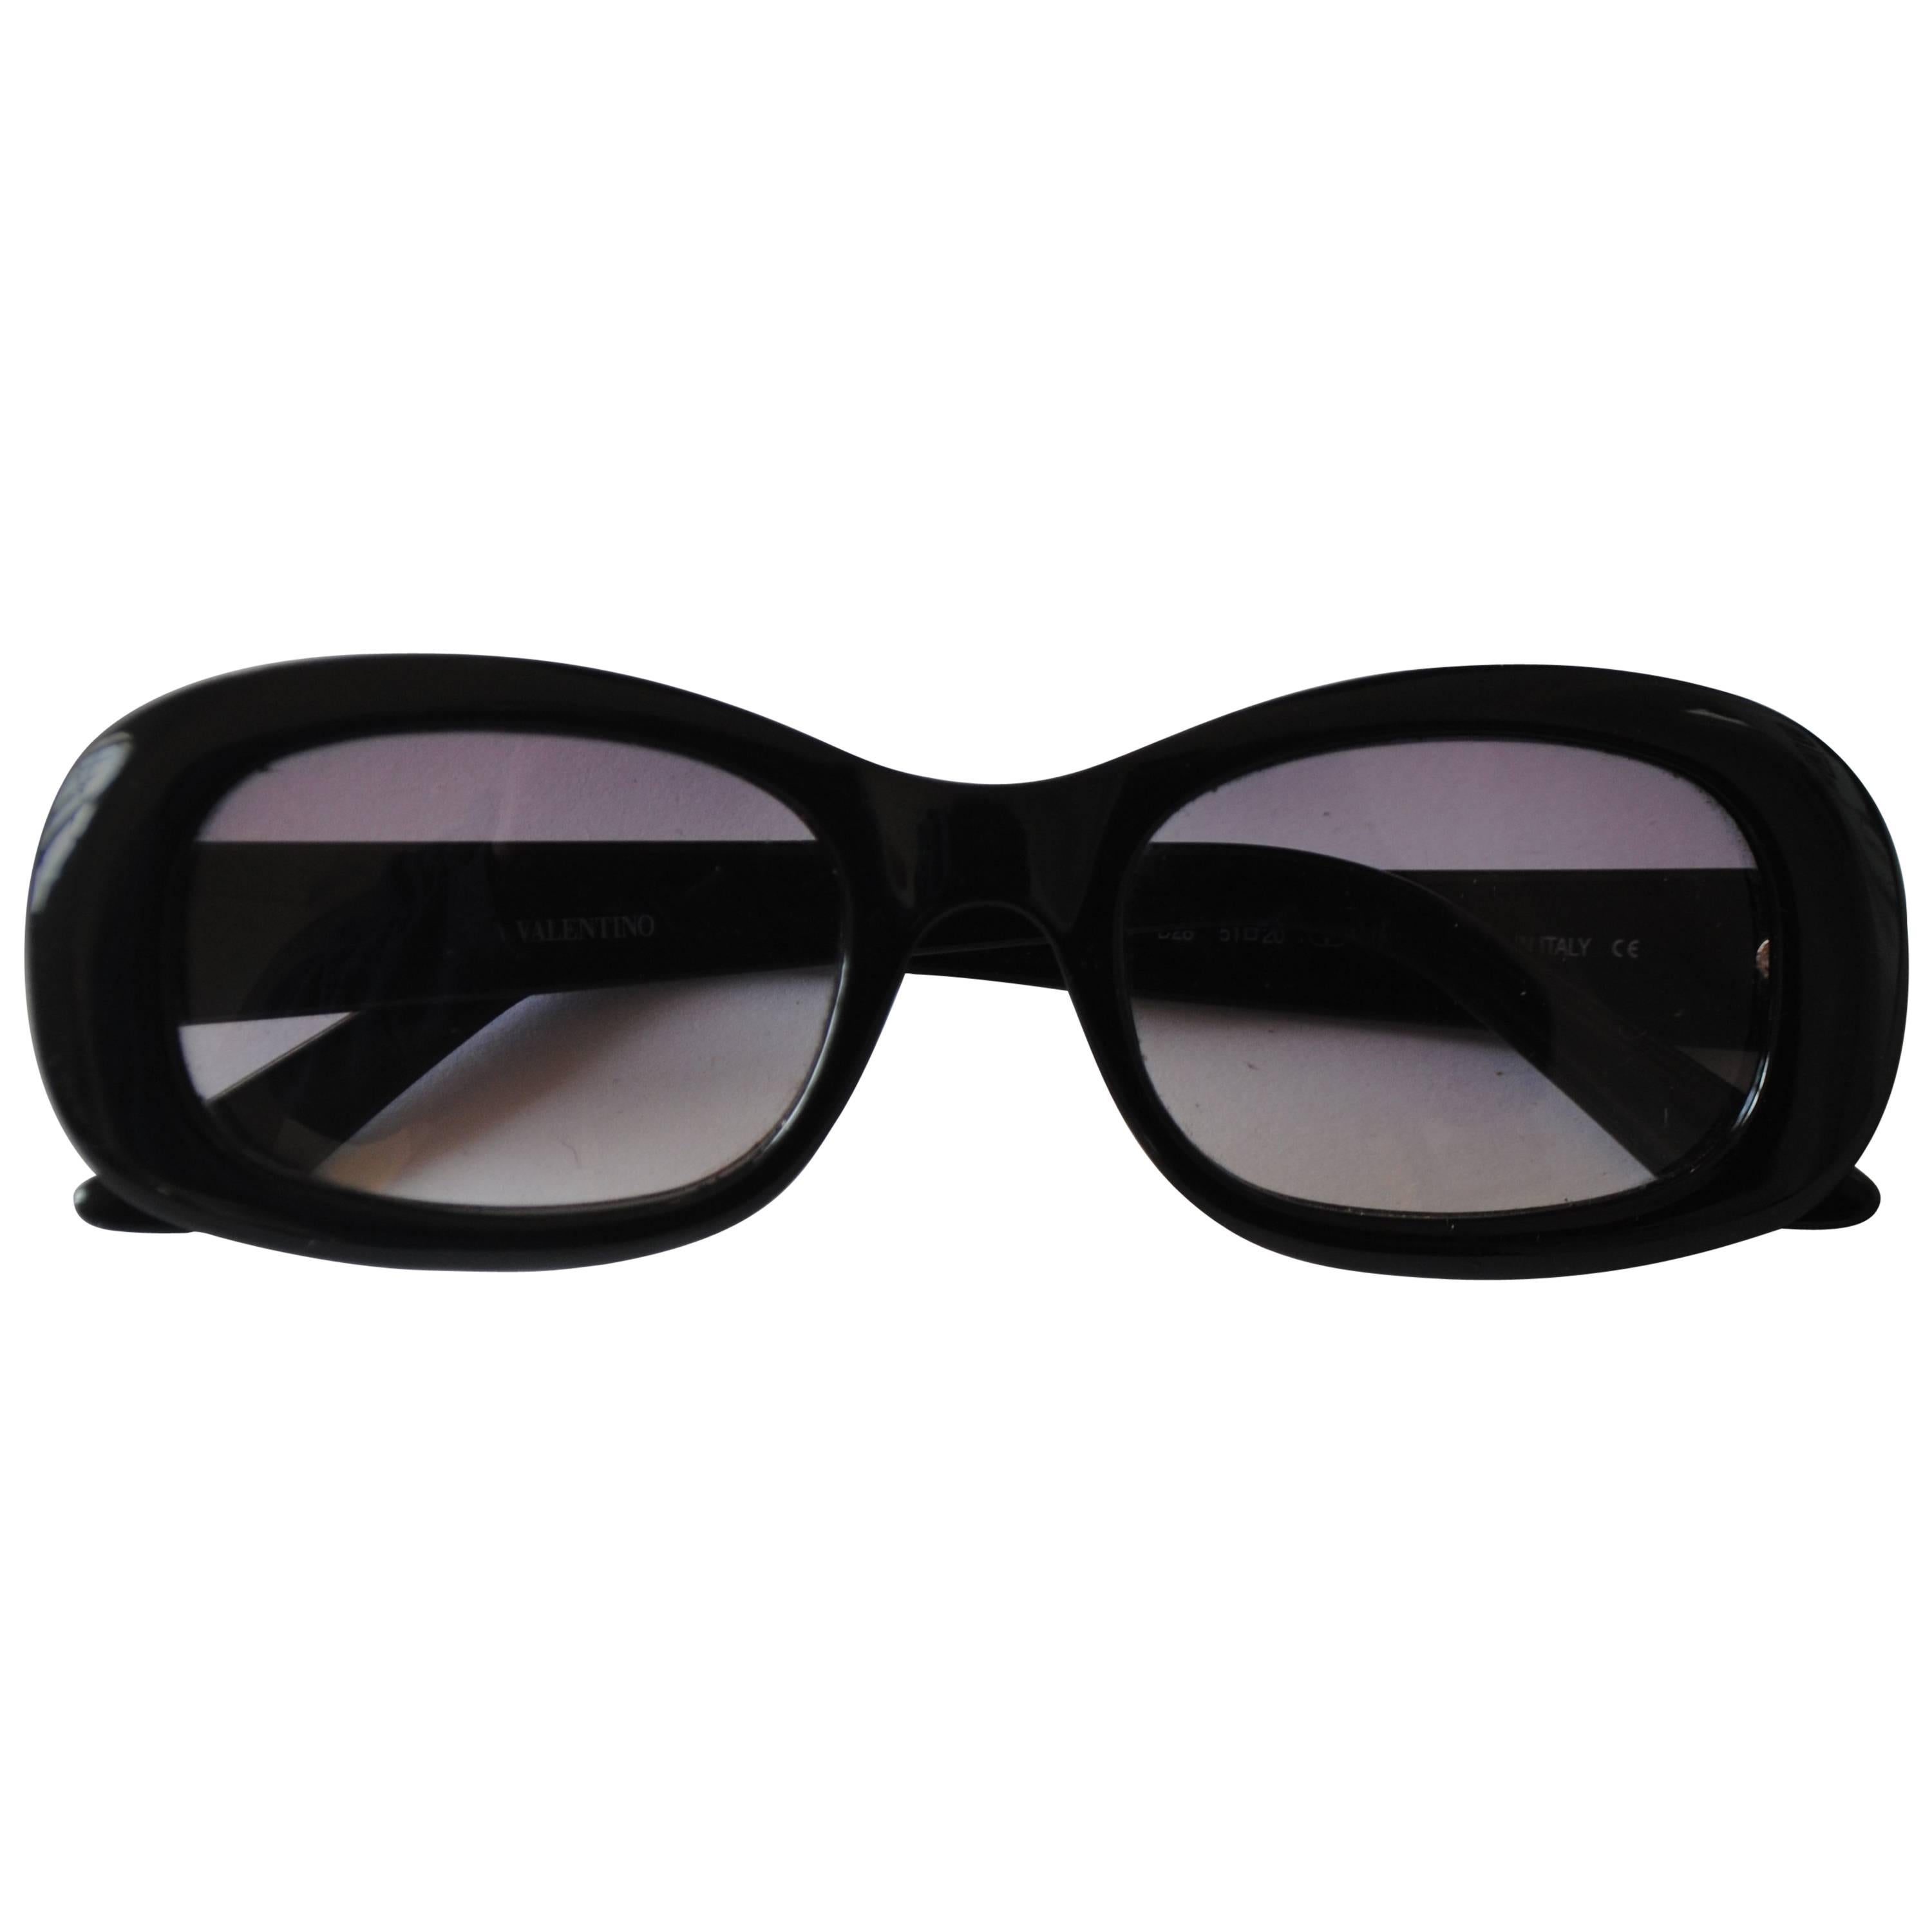 Valentino black sunglasses